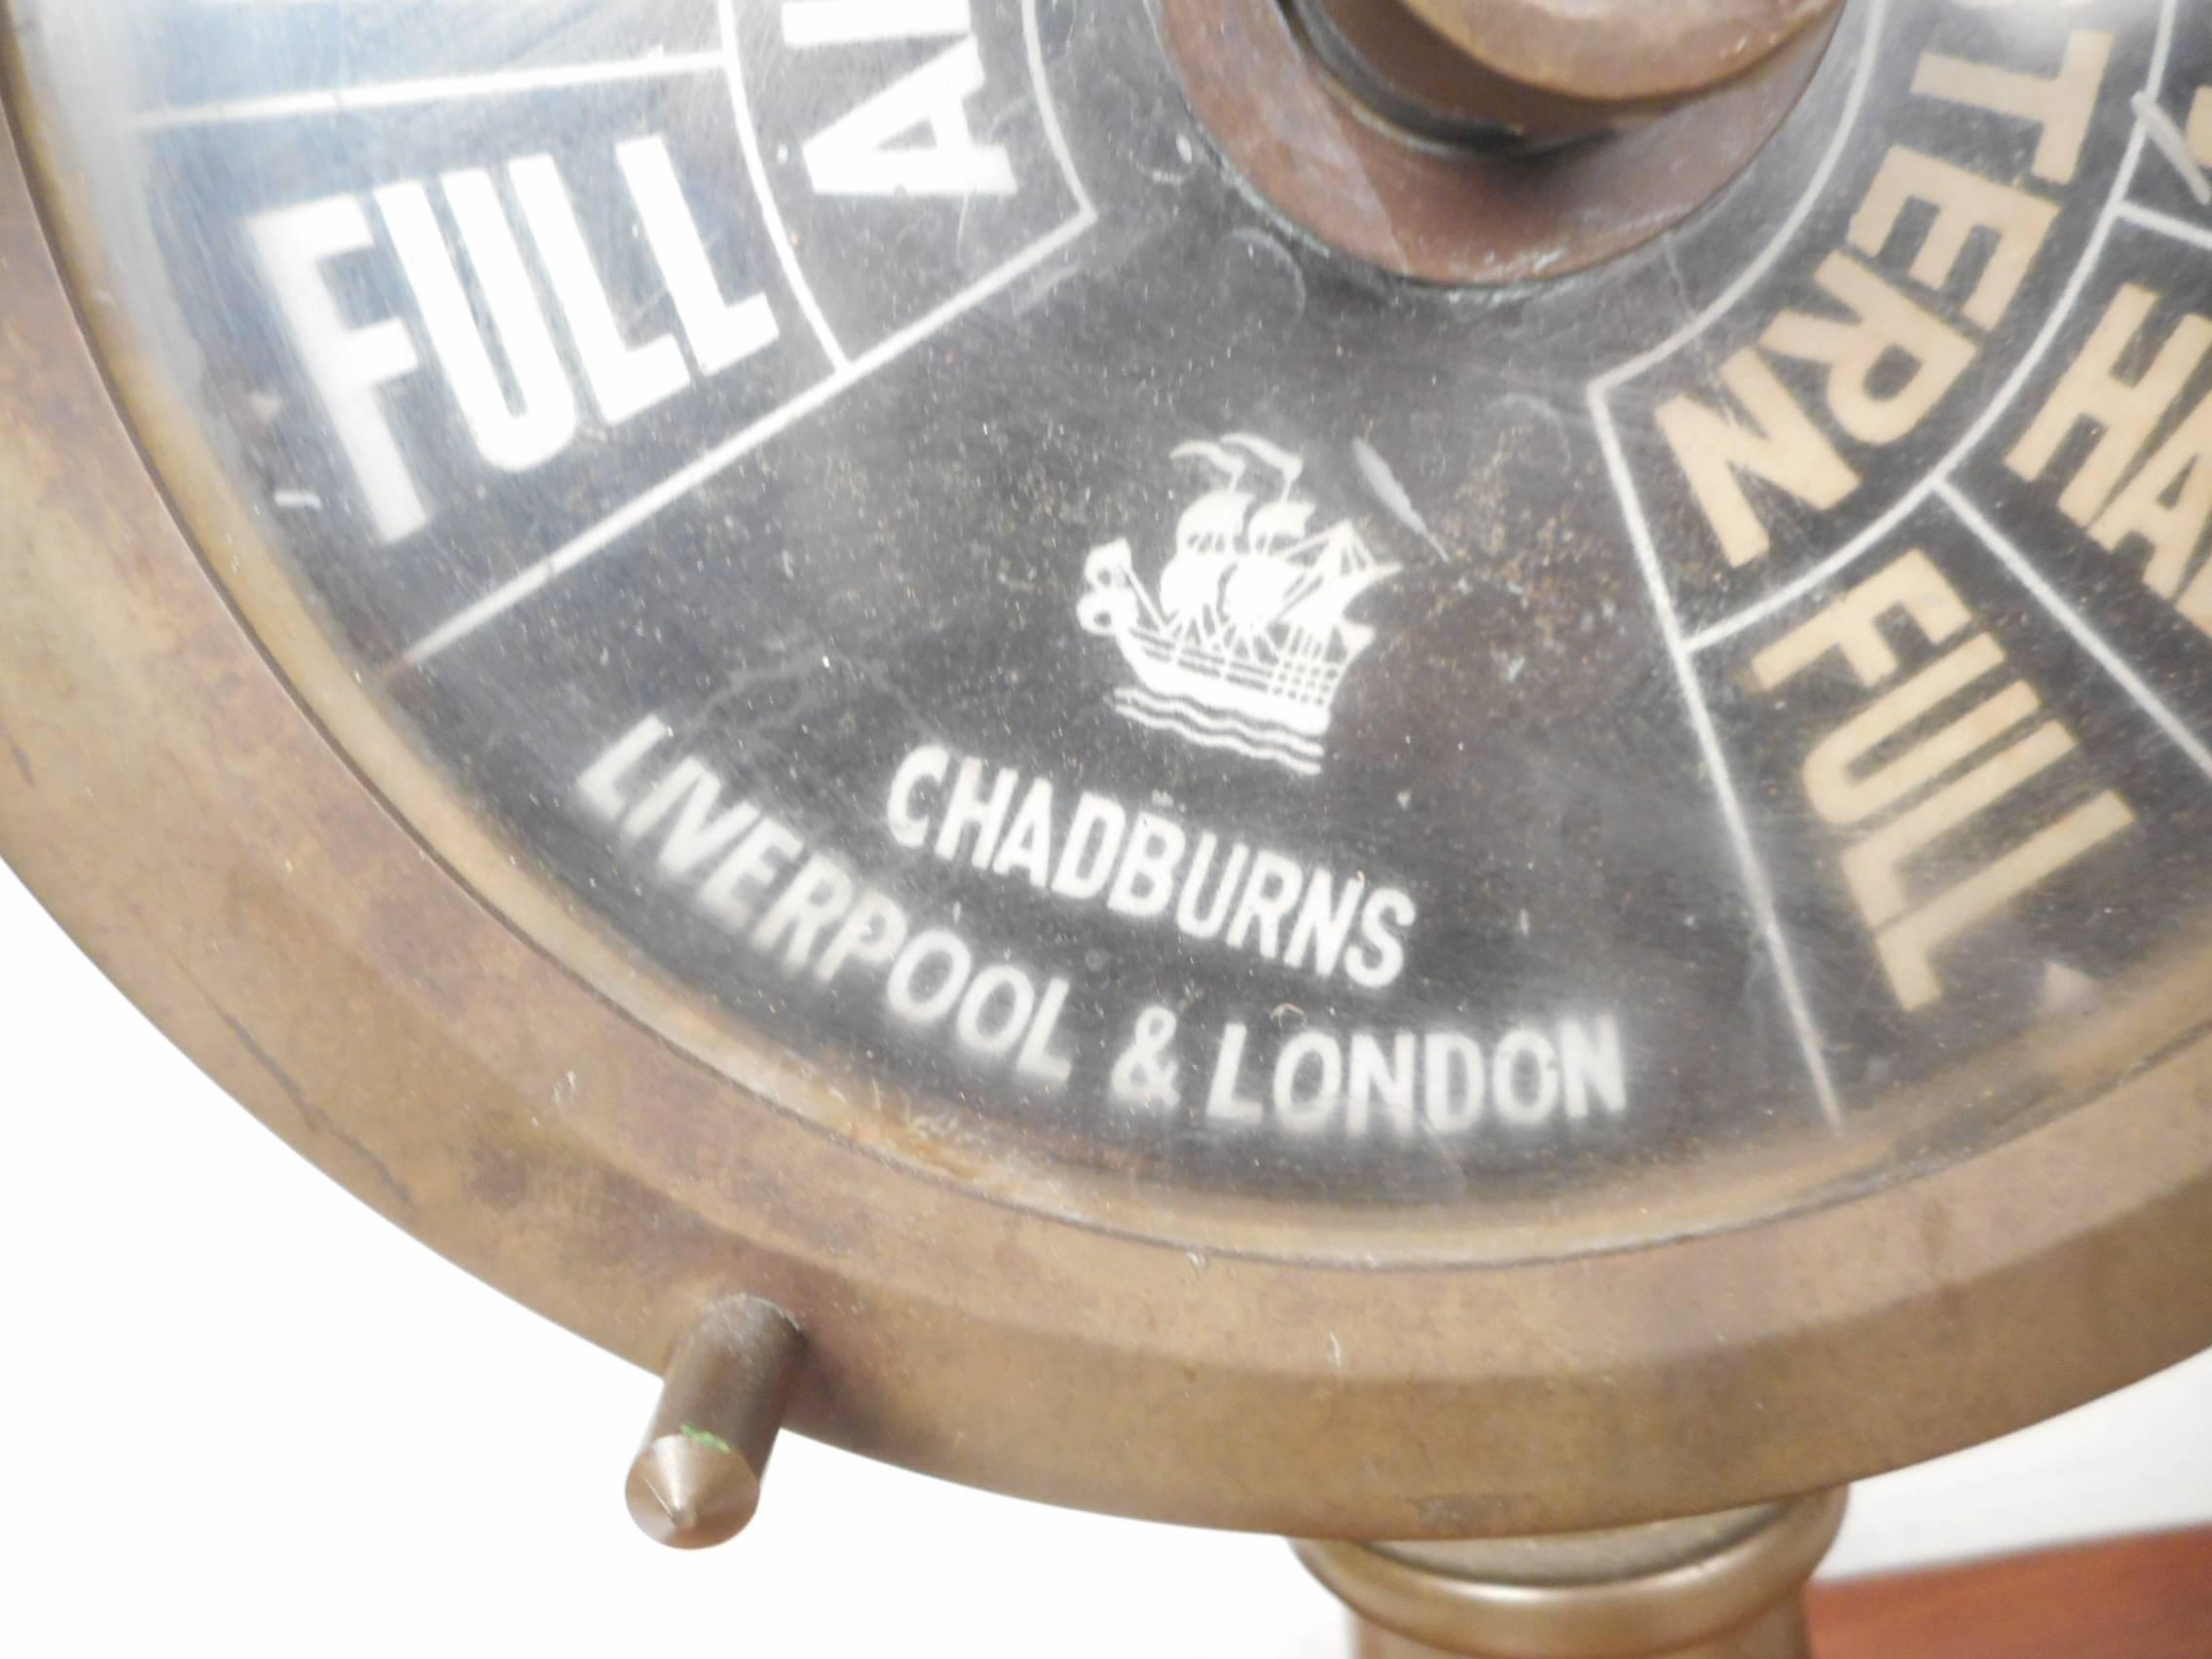 chadburns ships telegraph